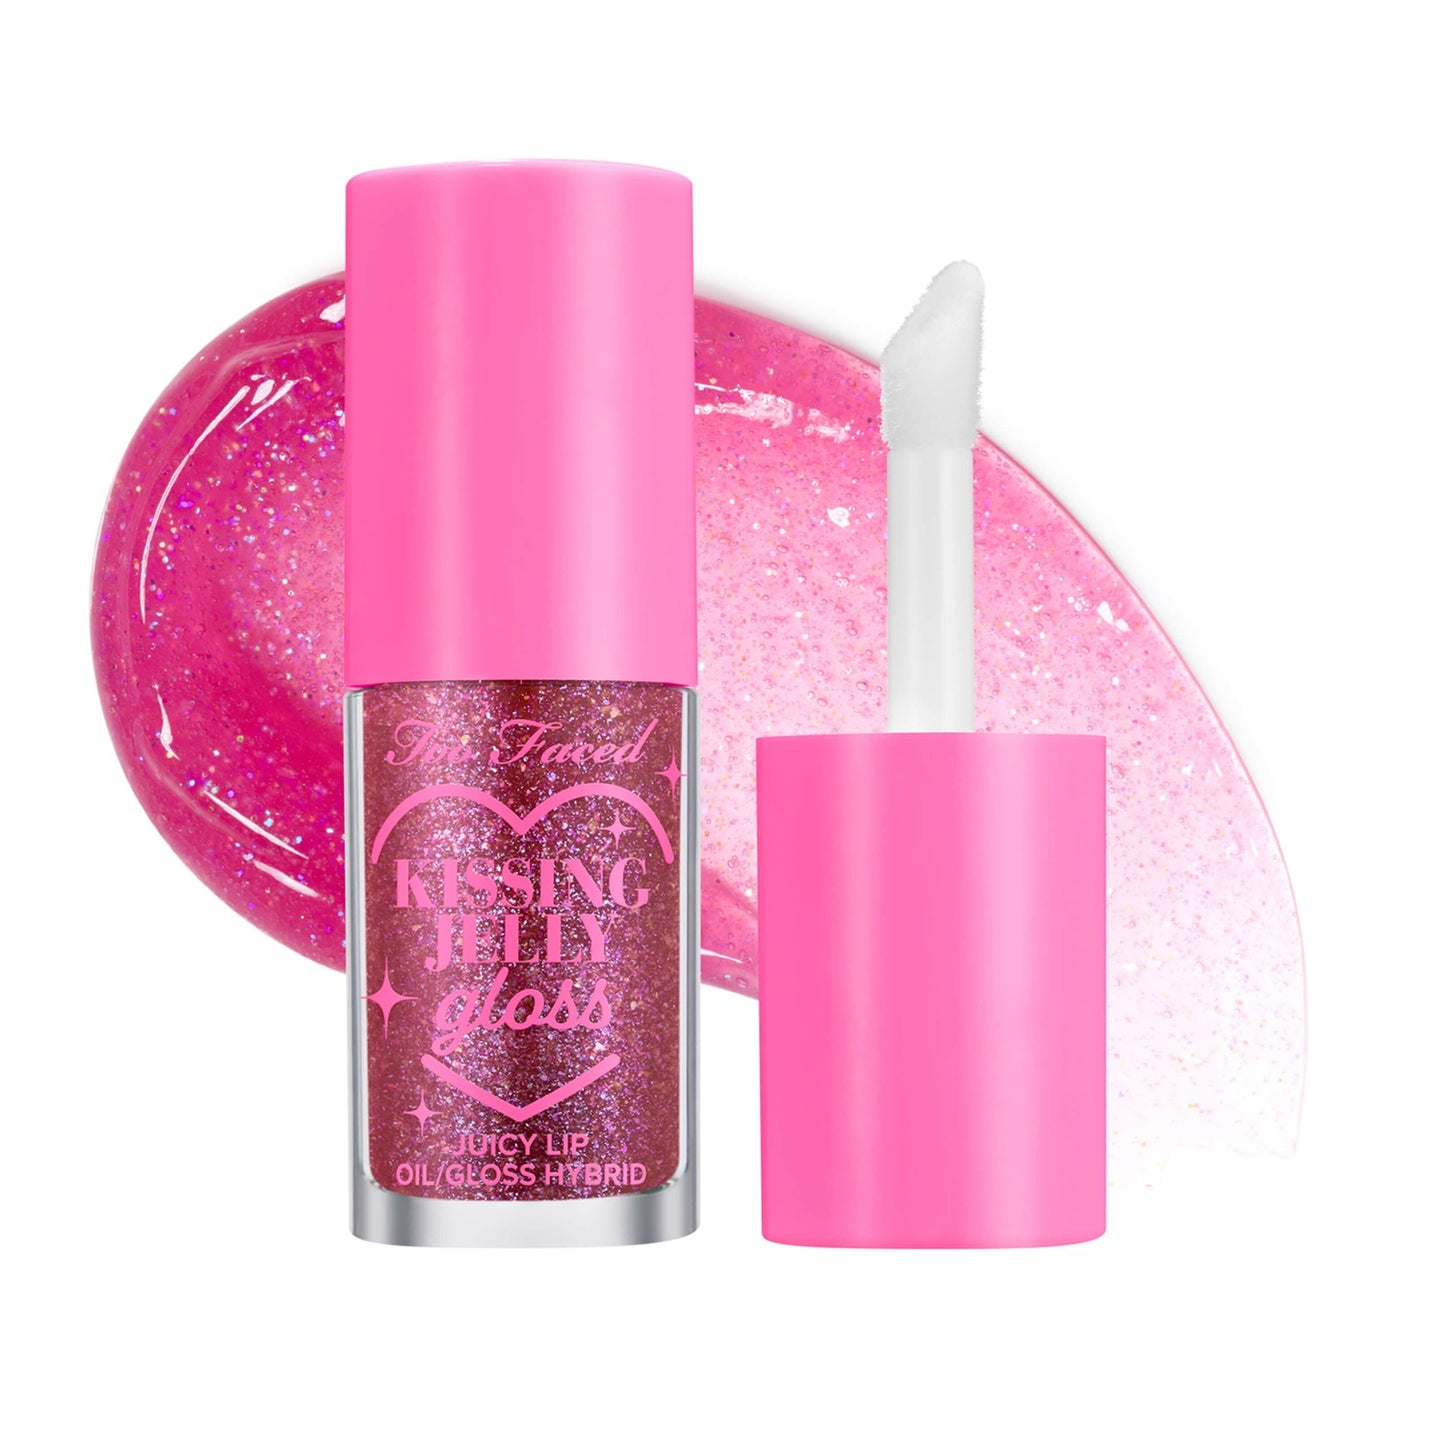 Too Faced Kissing Jelly Lip Oil Gloss 4.5ml - Grape Soda